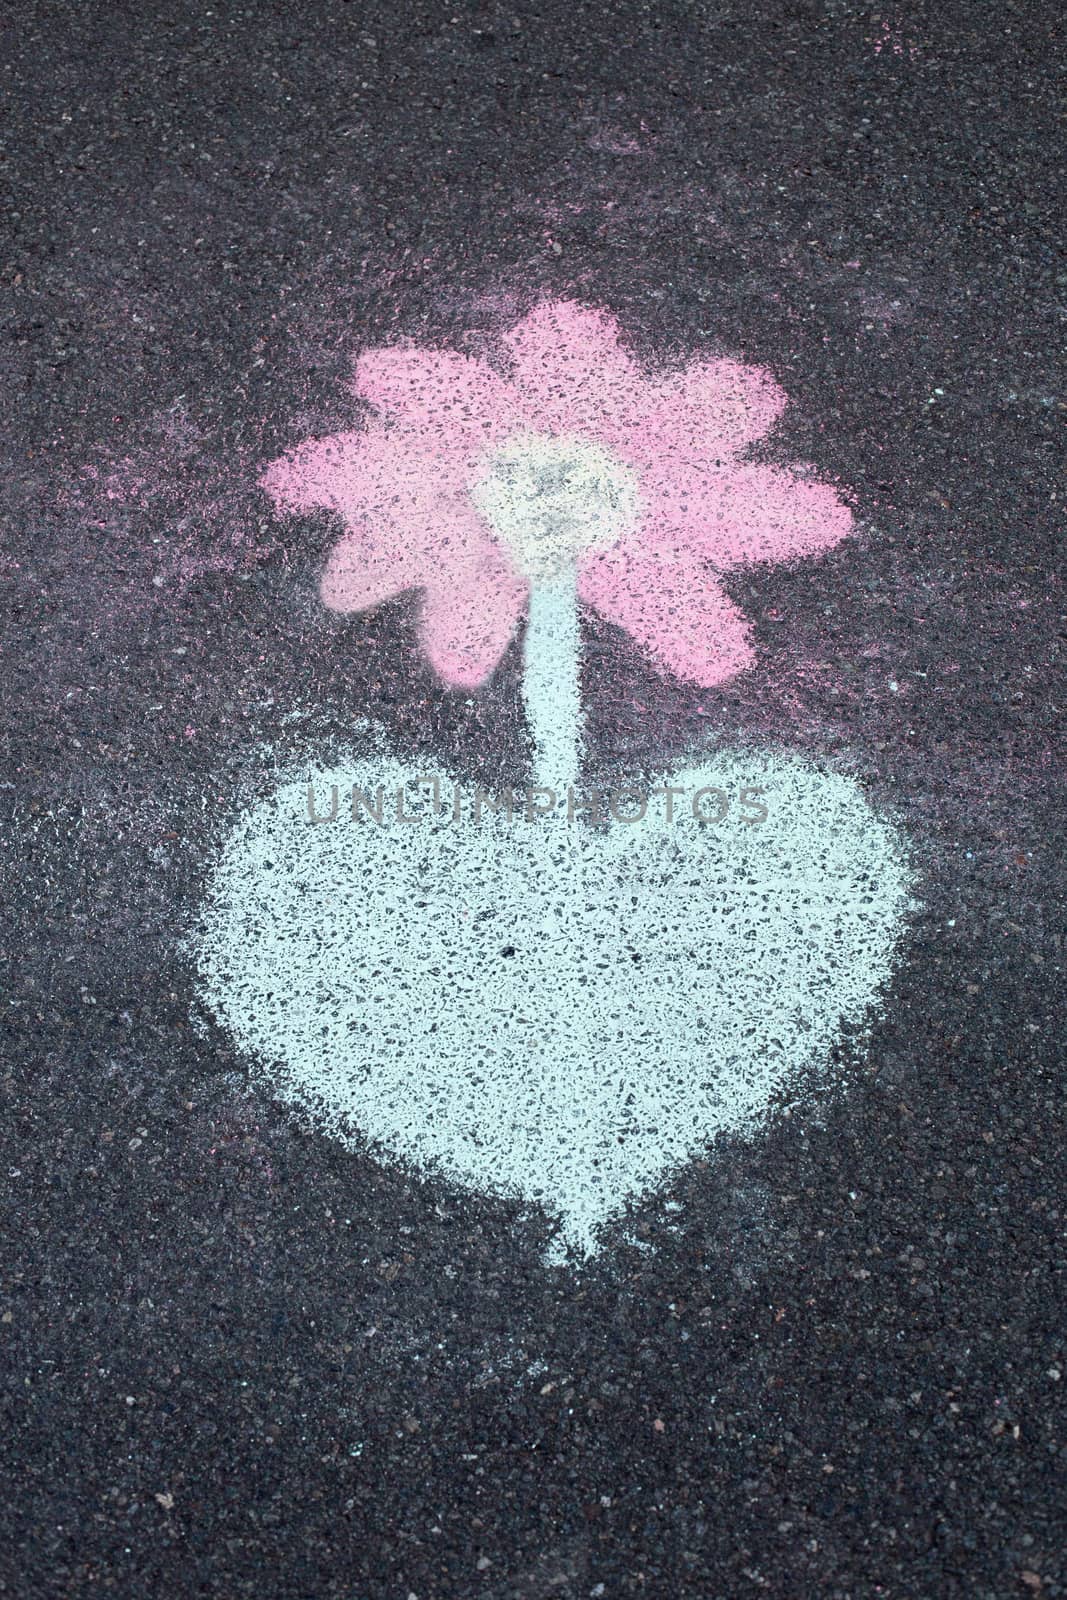 chalk drawing flower on asphalt, road